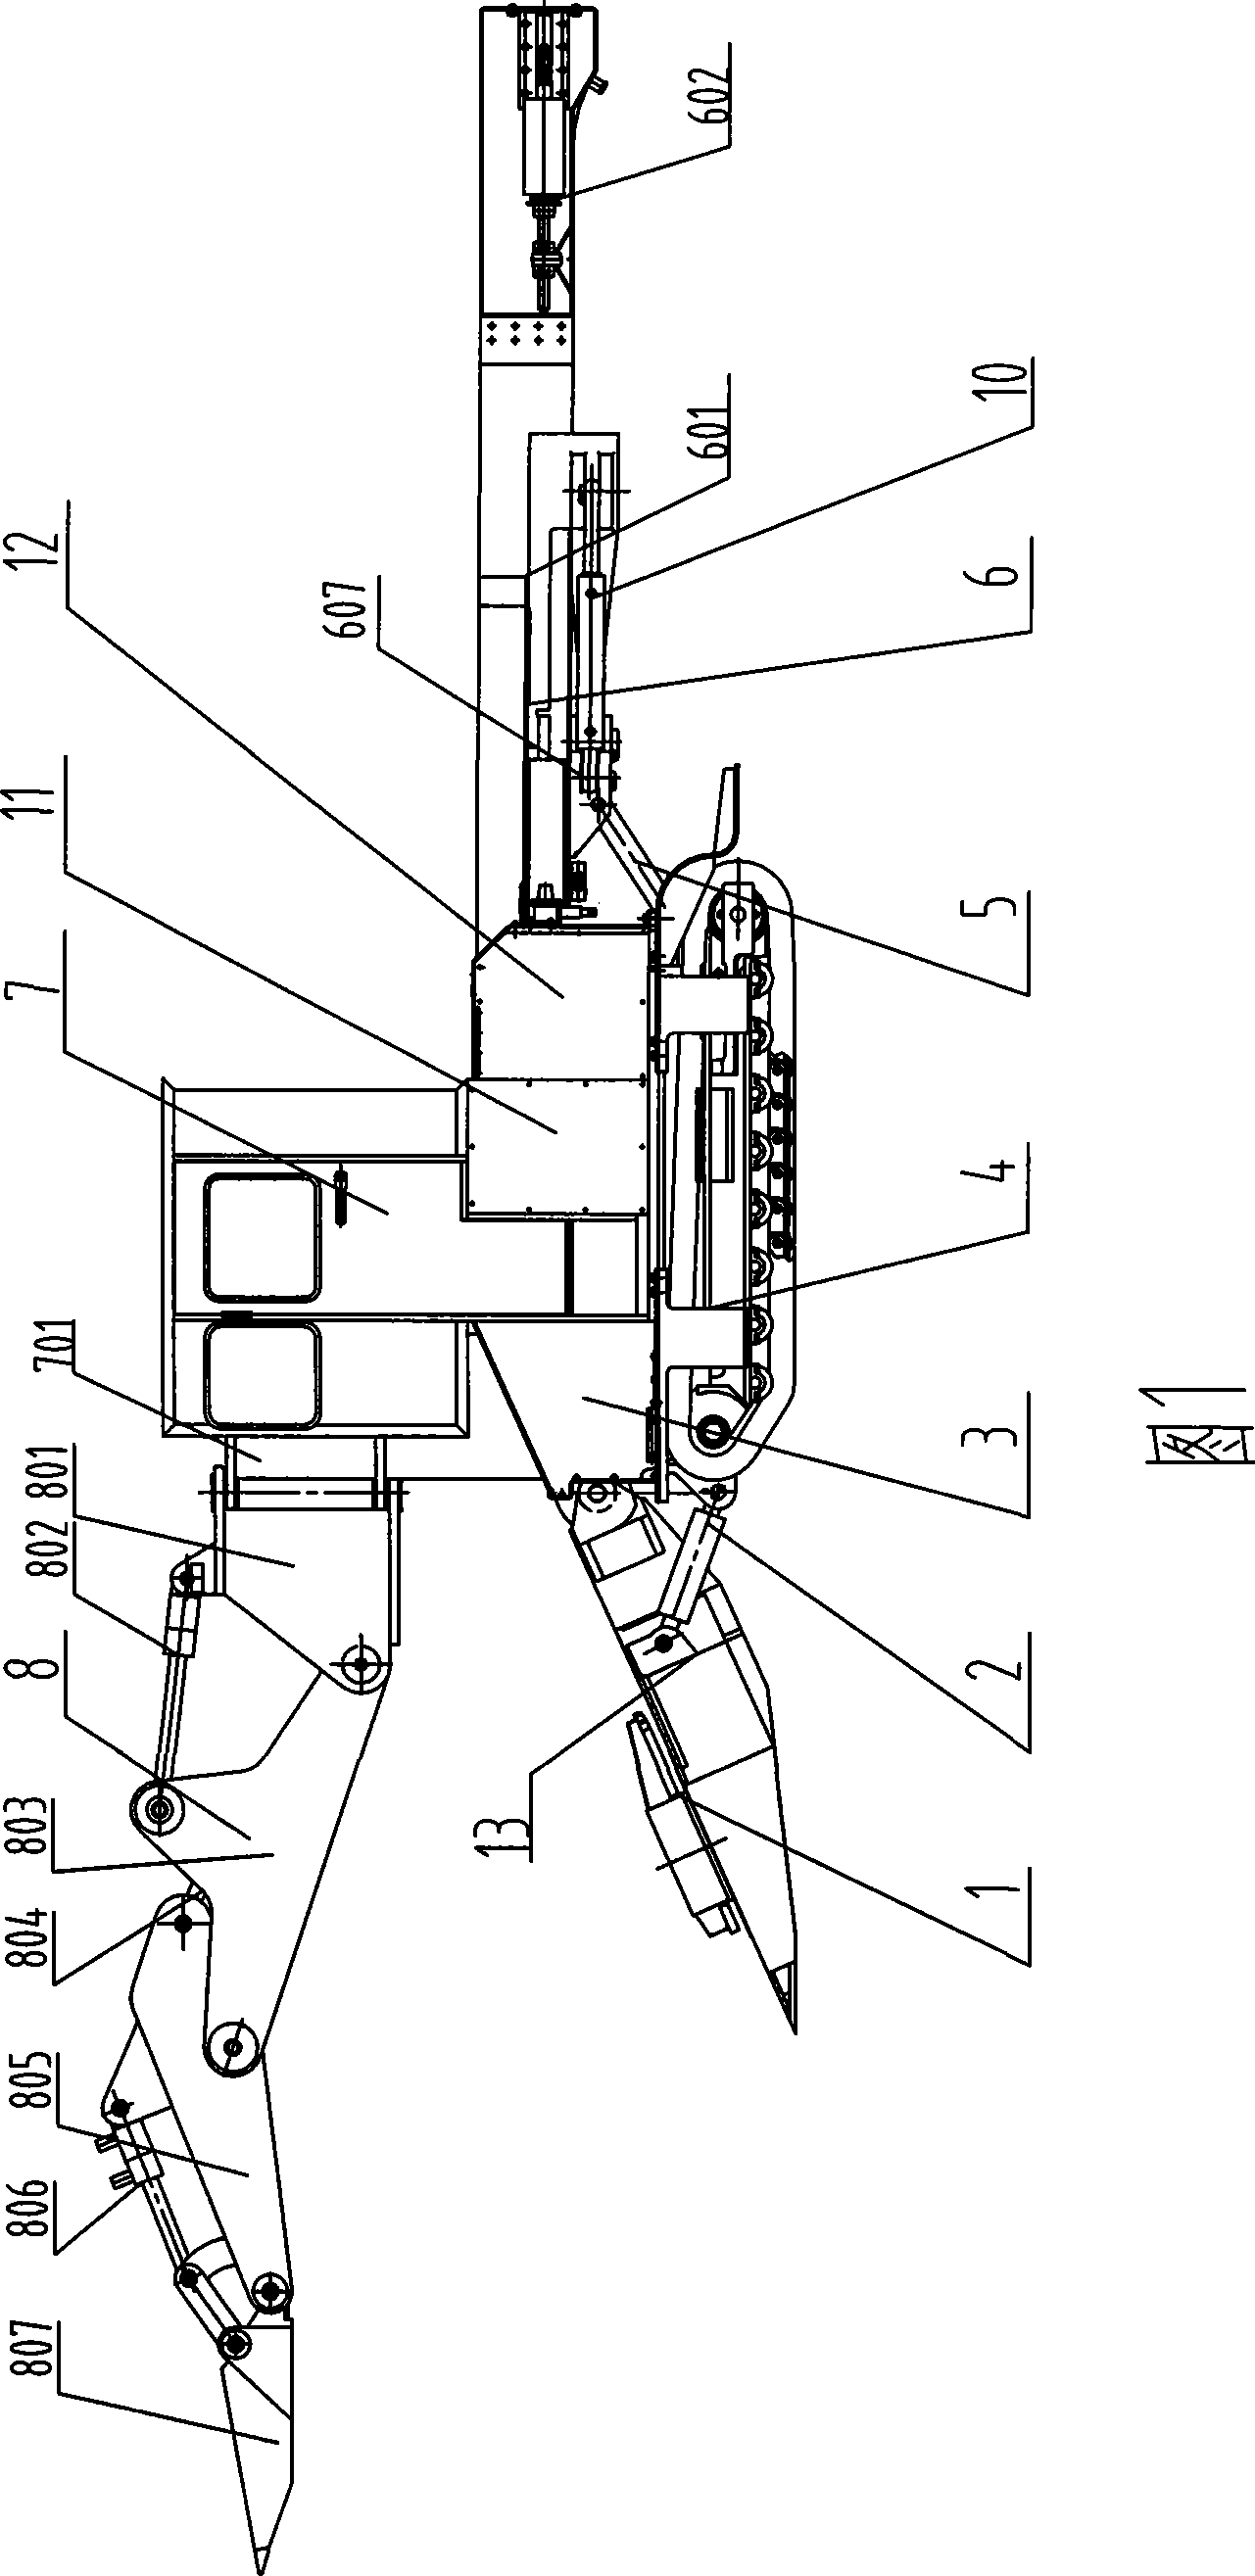 Continuous track raking loader